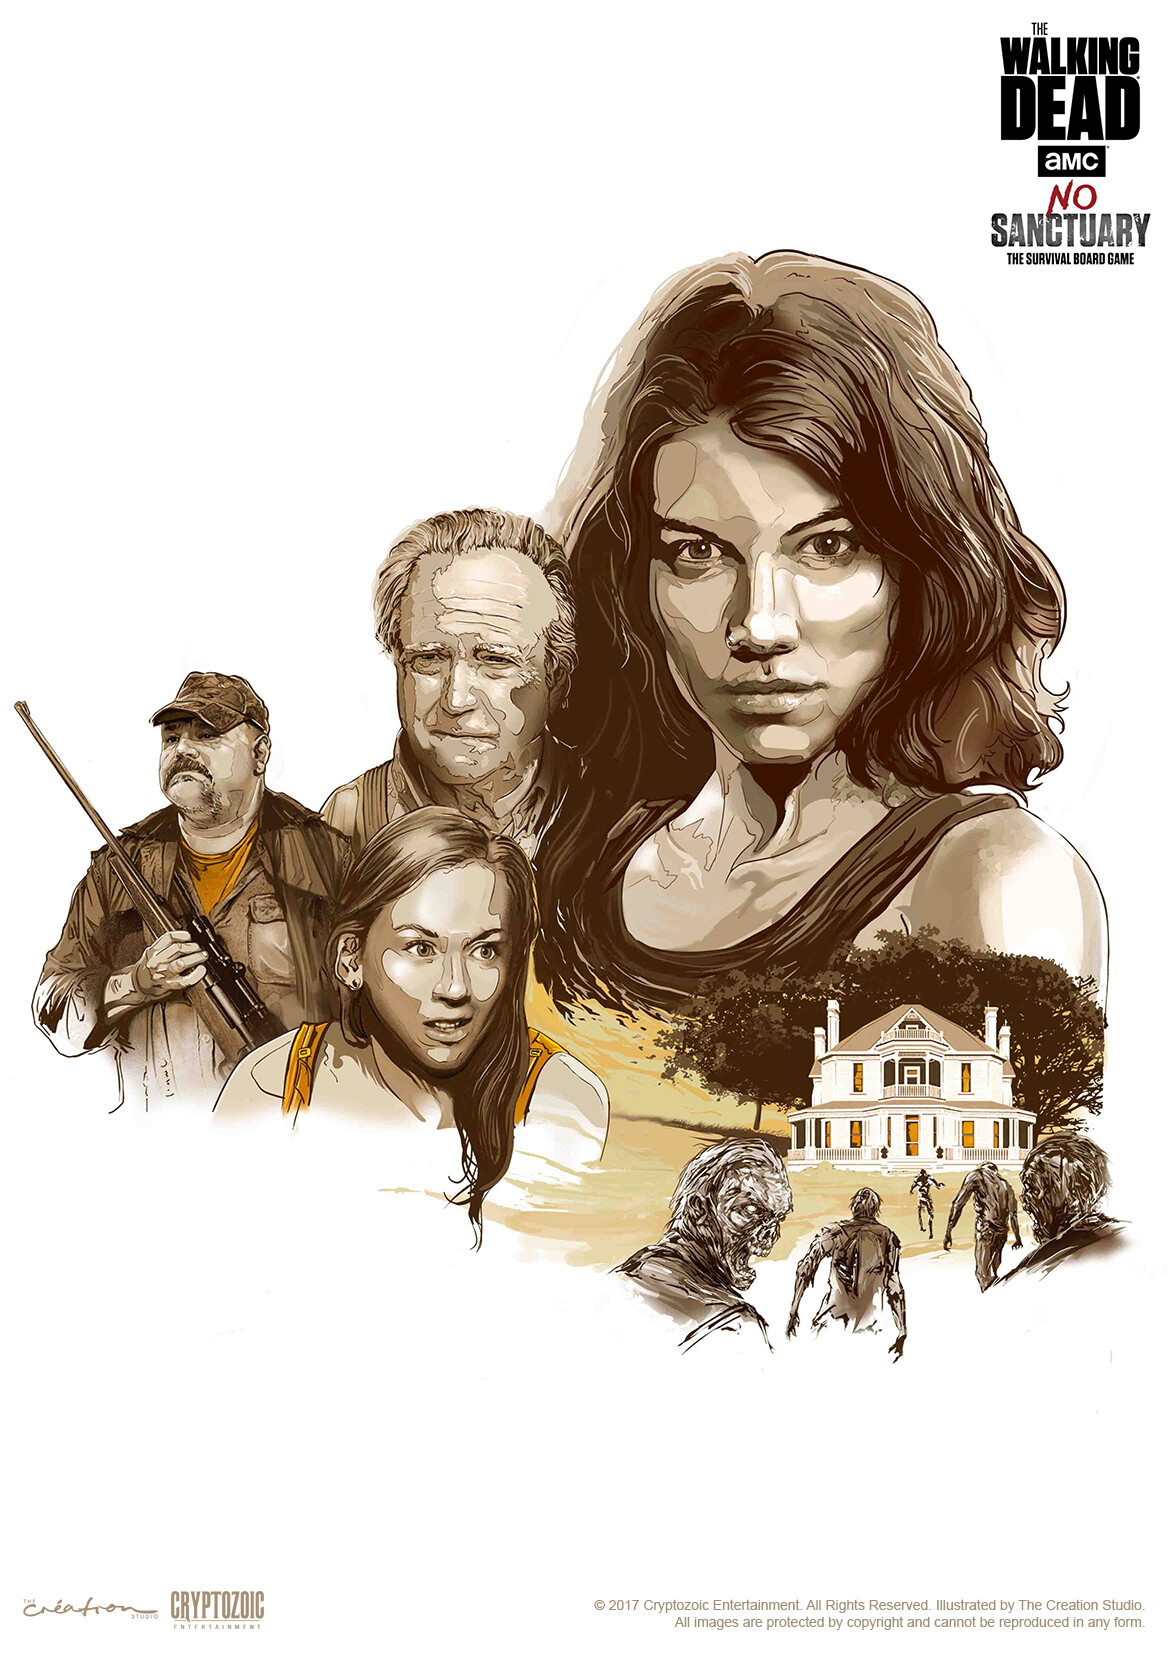 Telltale The Walking Dead Game Decoration Art Poster Wall Art